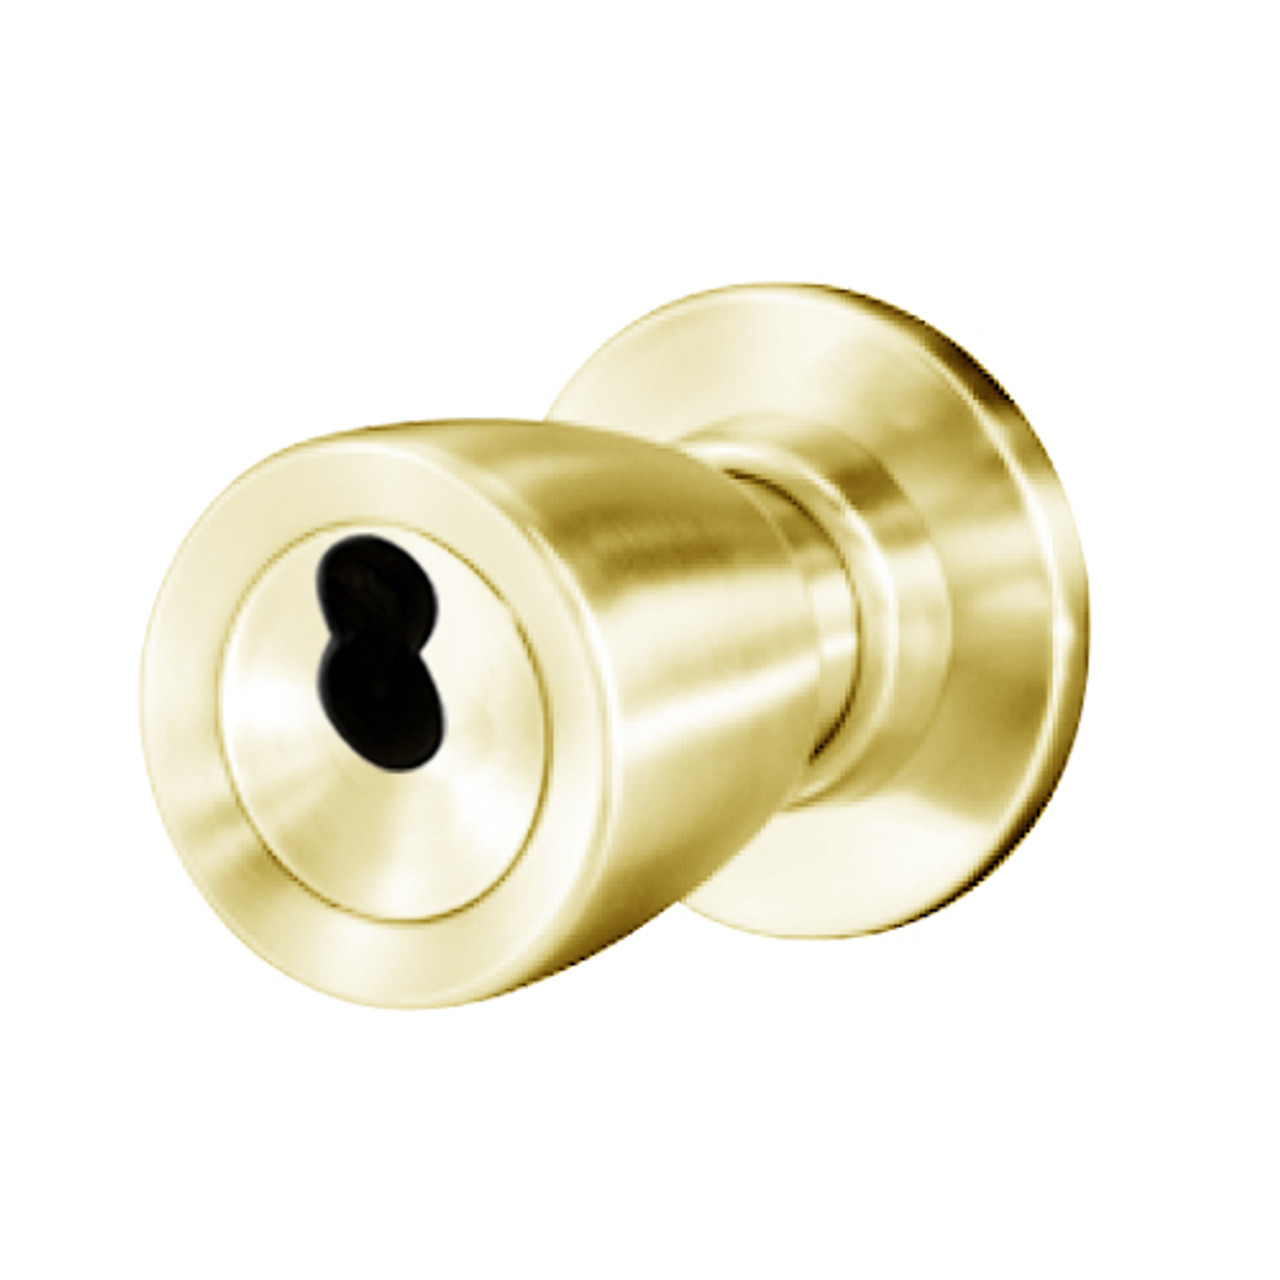 8K47YR6CS3605 Best 8K Series Exit Heavy Duty Cylindrical Knob Locks with Tulip Style in Bright Brass